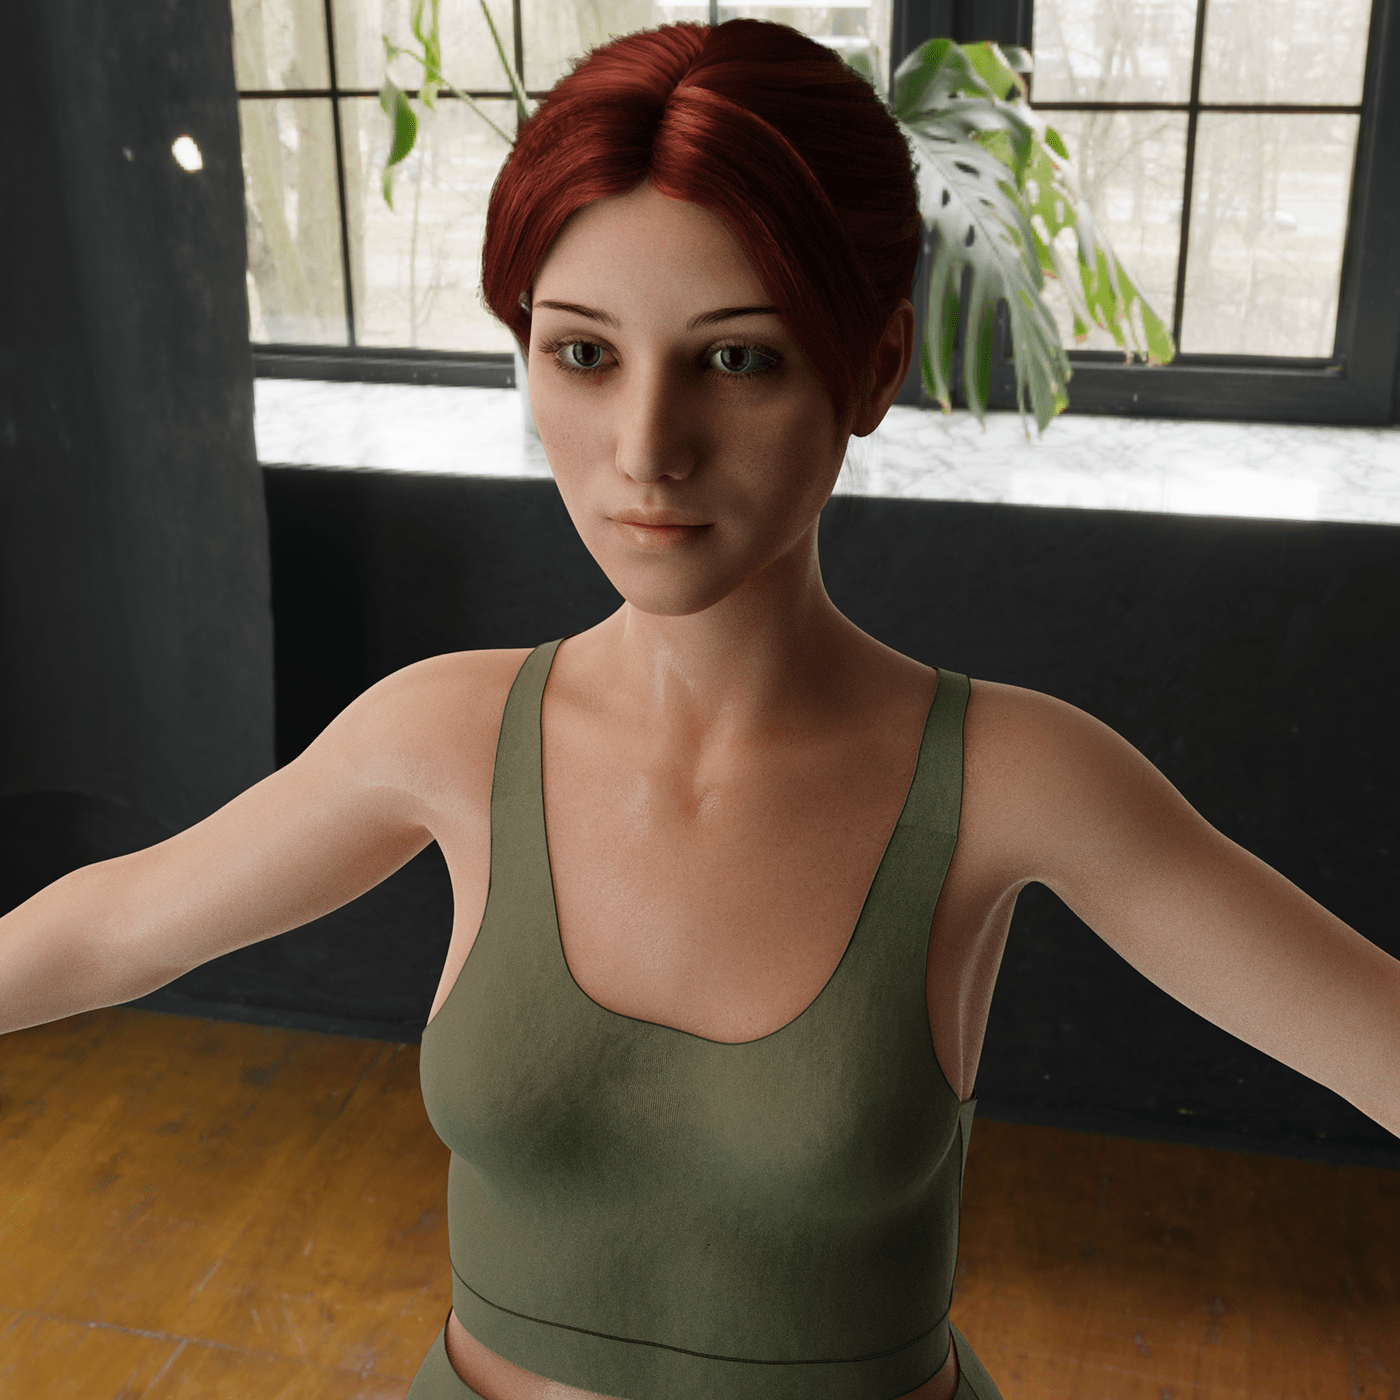 3d modeling Character design  animation  motion graphics  nft Digital Art  realistic 3D visualization Clothing